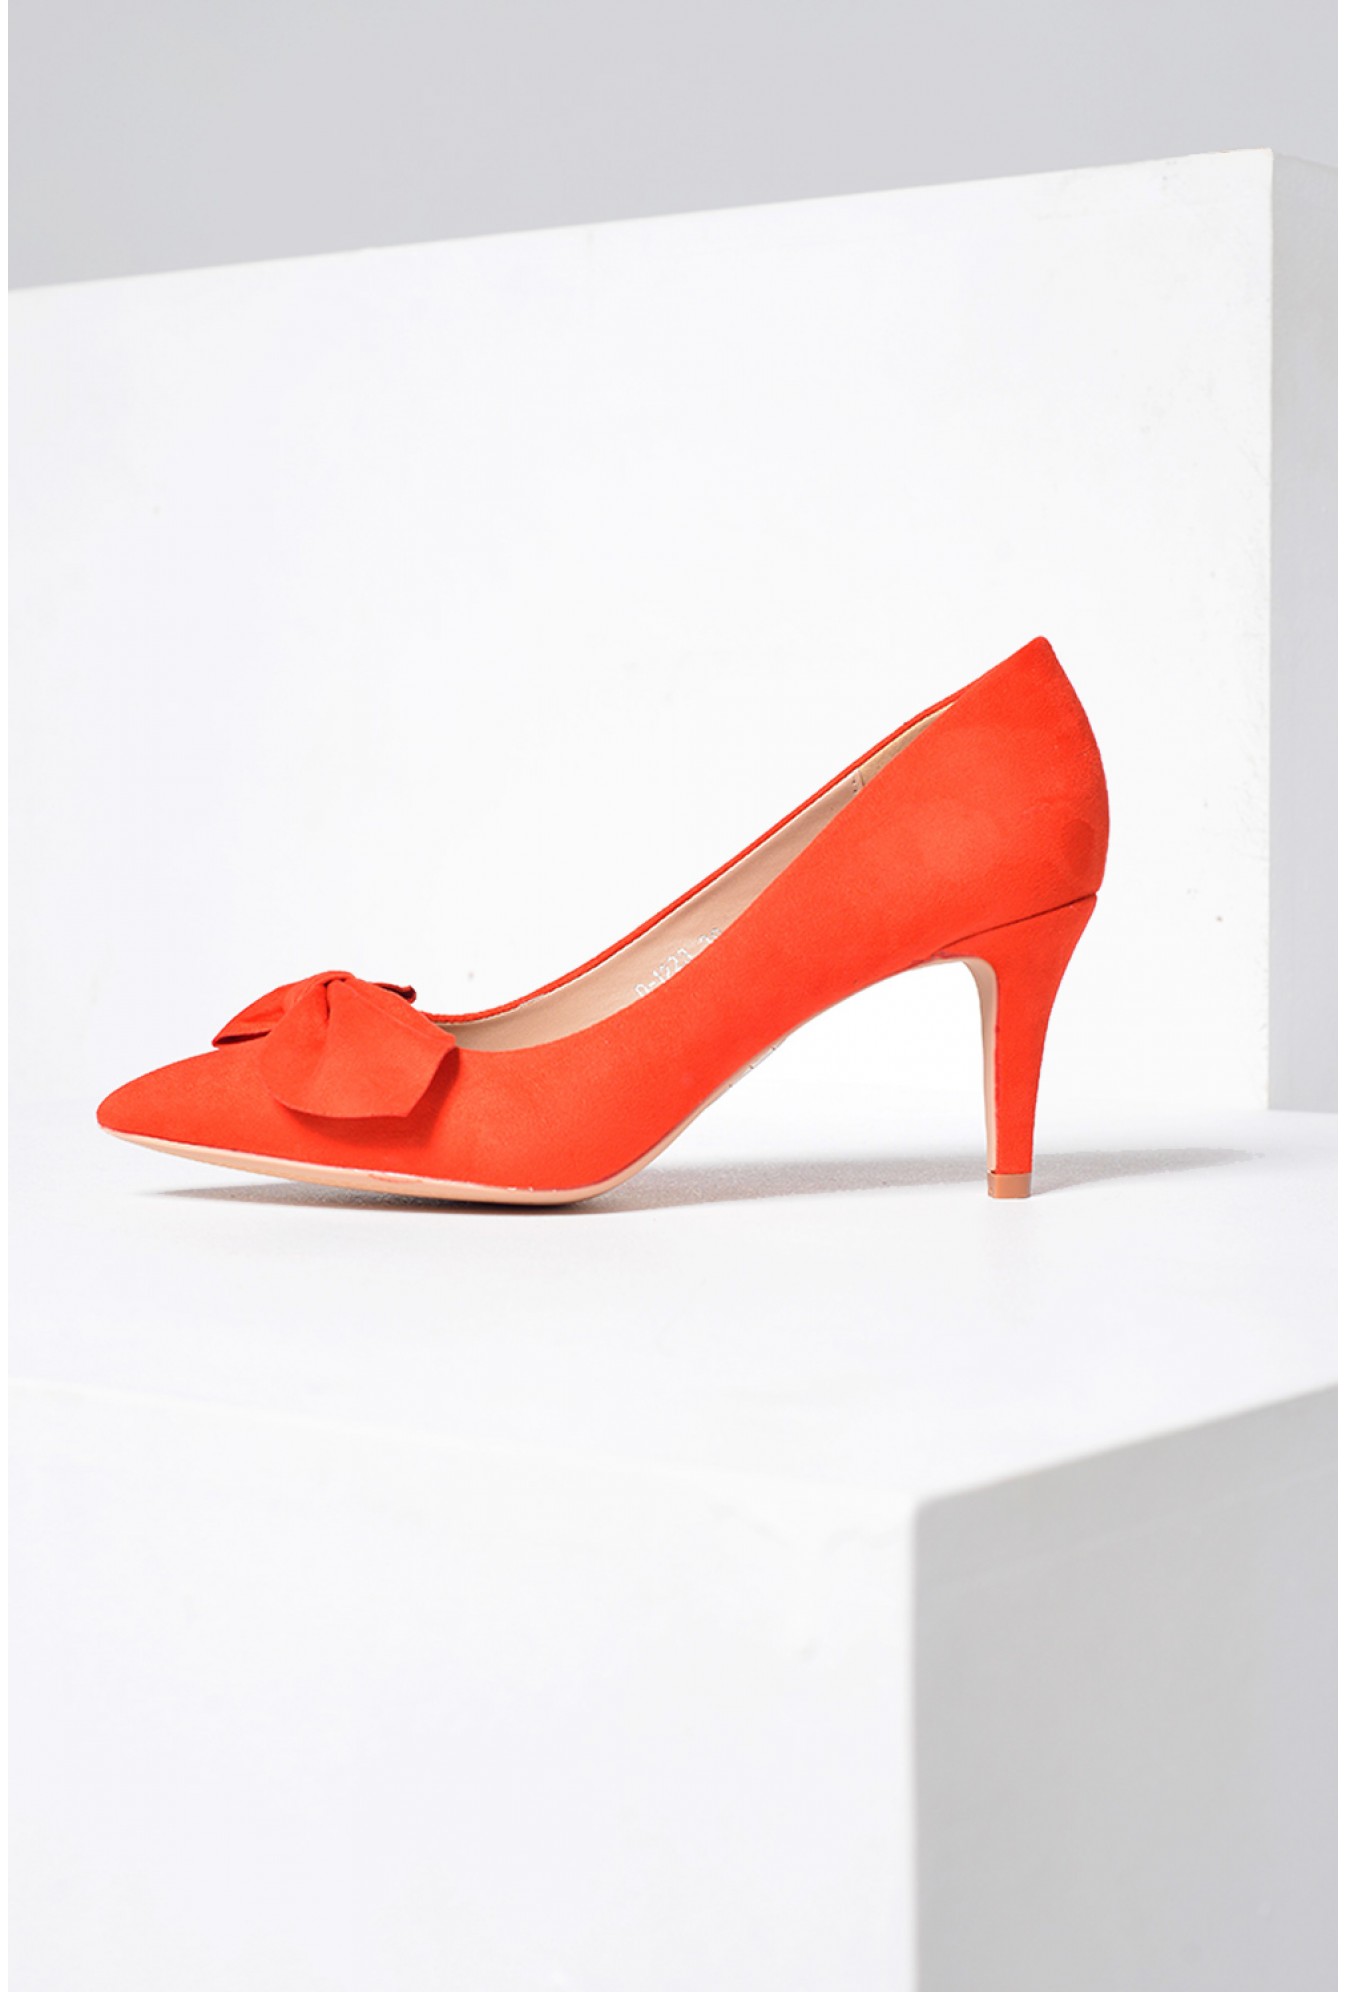 orange court shoes